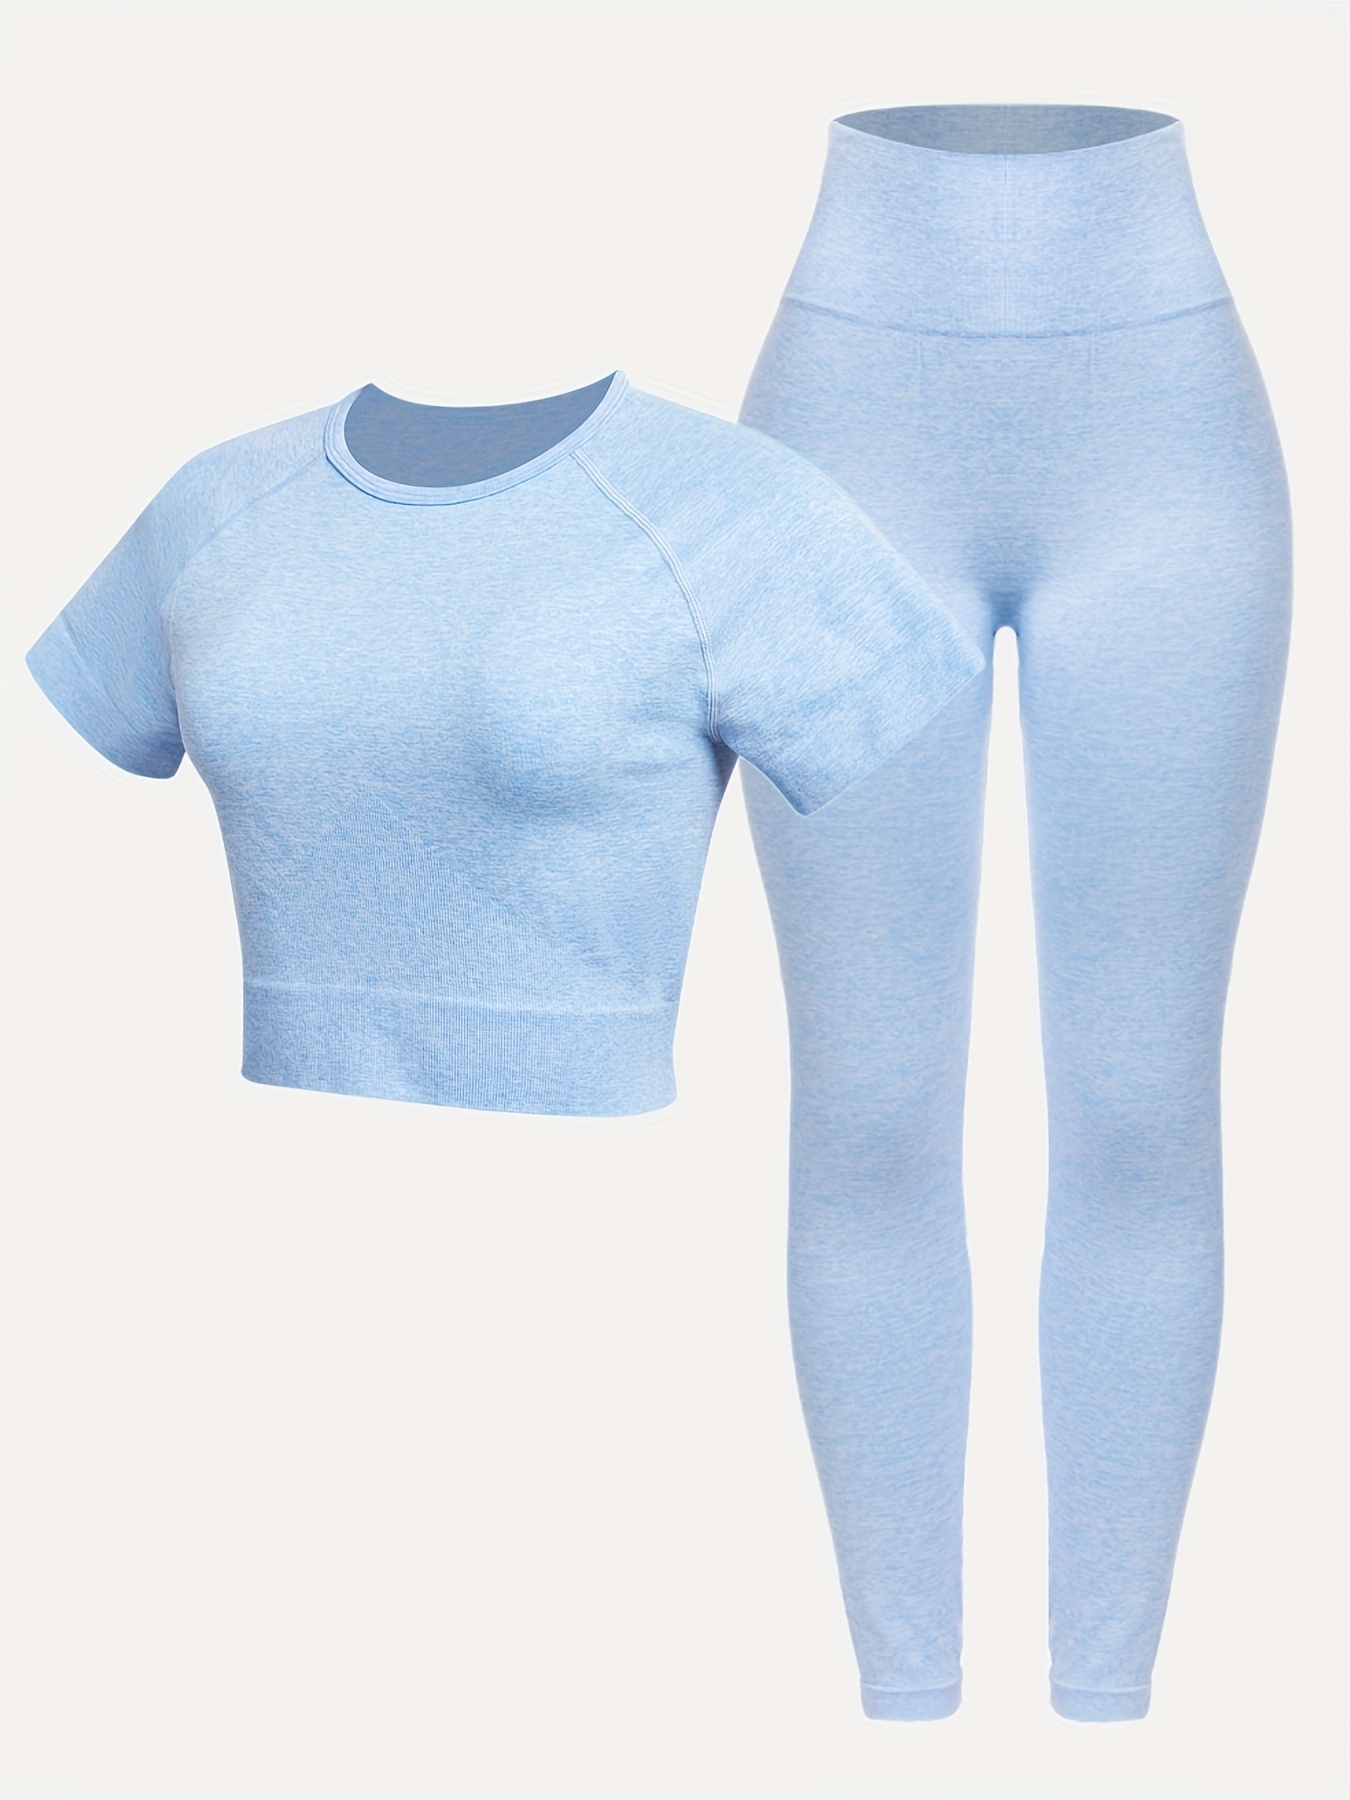 Mango activewear seamless leggings in light blue - part of a set